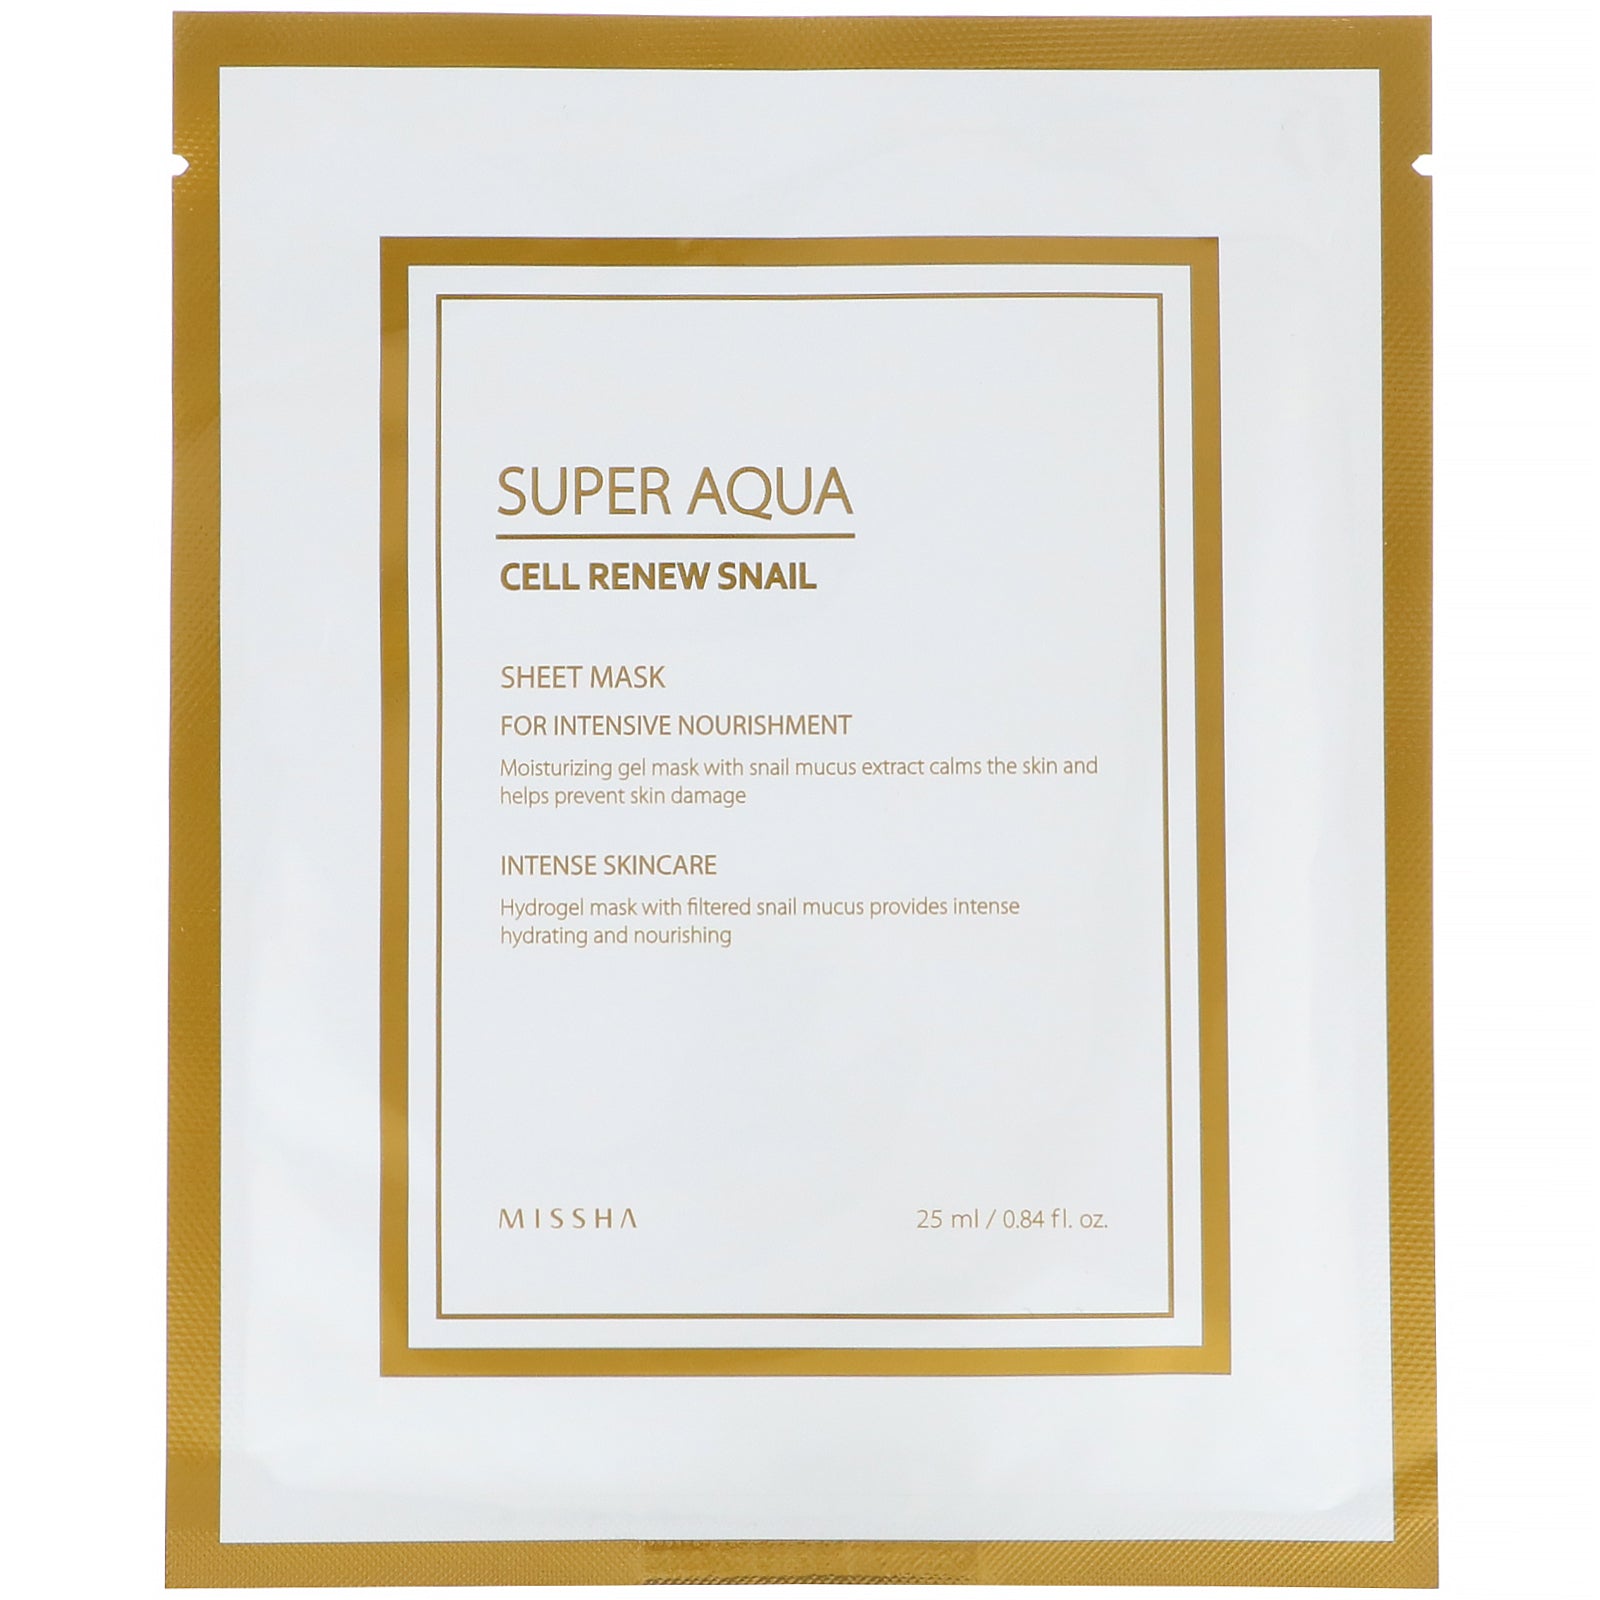 Missha, Super Aqua, Cell Renew Snail Sheet Mask, 1 Sheet, 0.84 fl oz (25 ml)